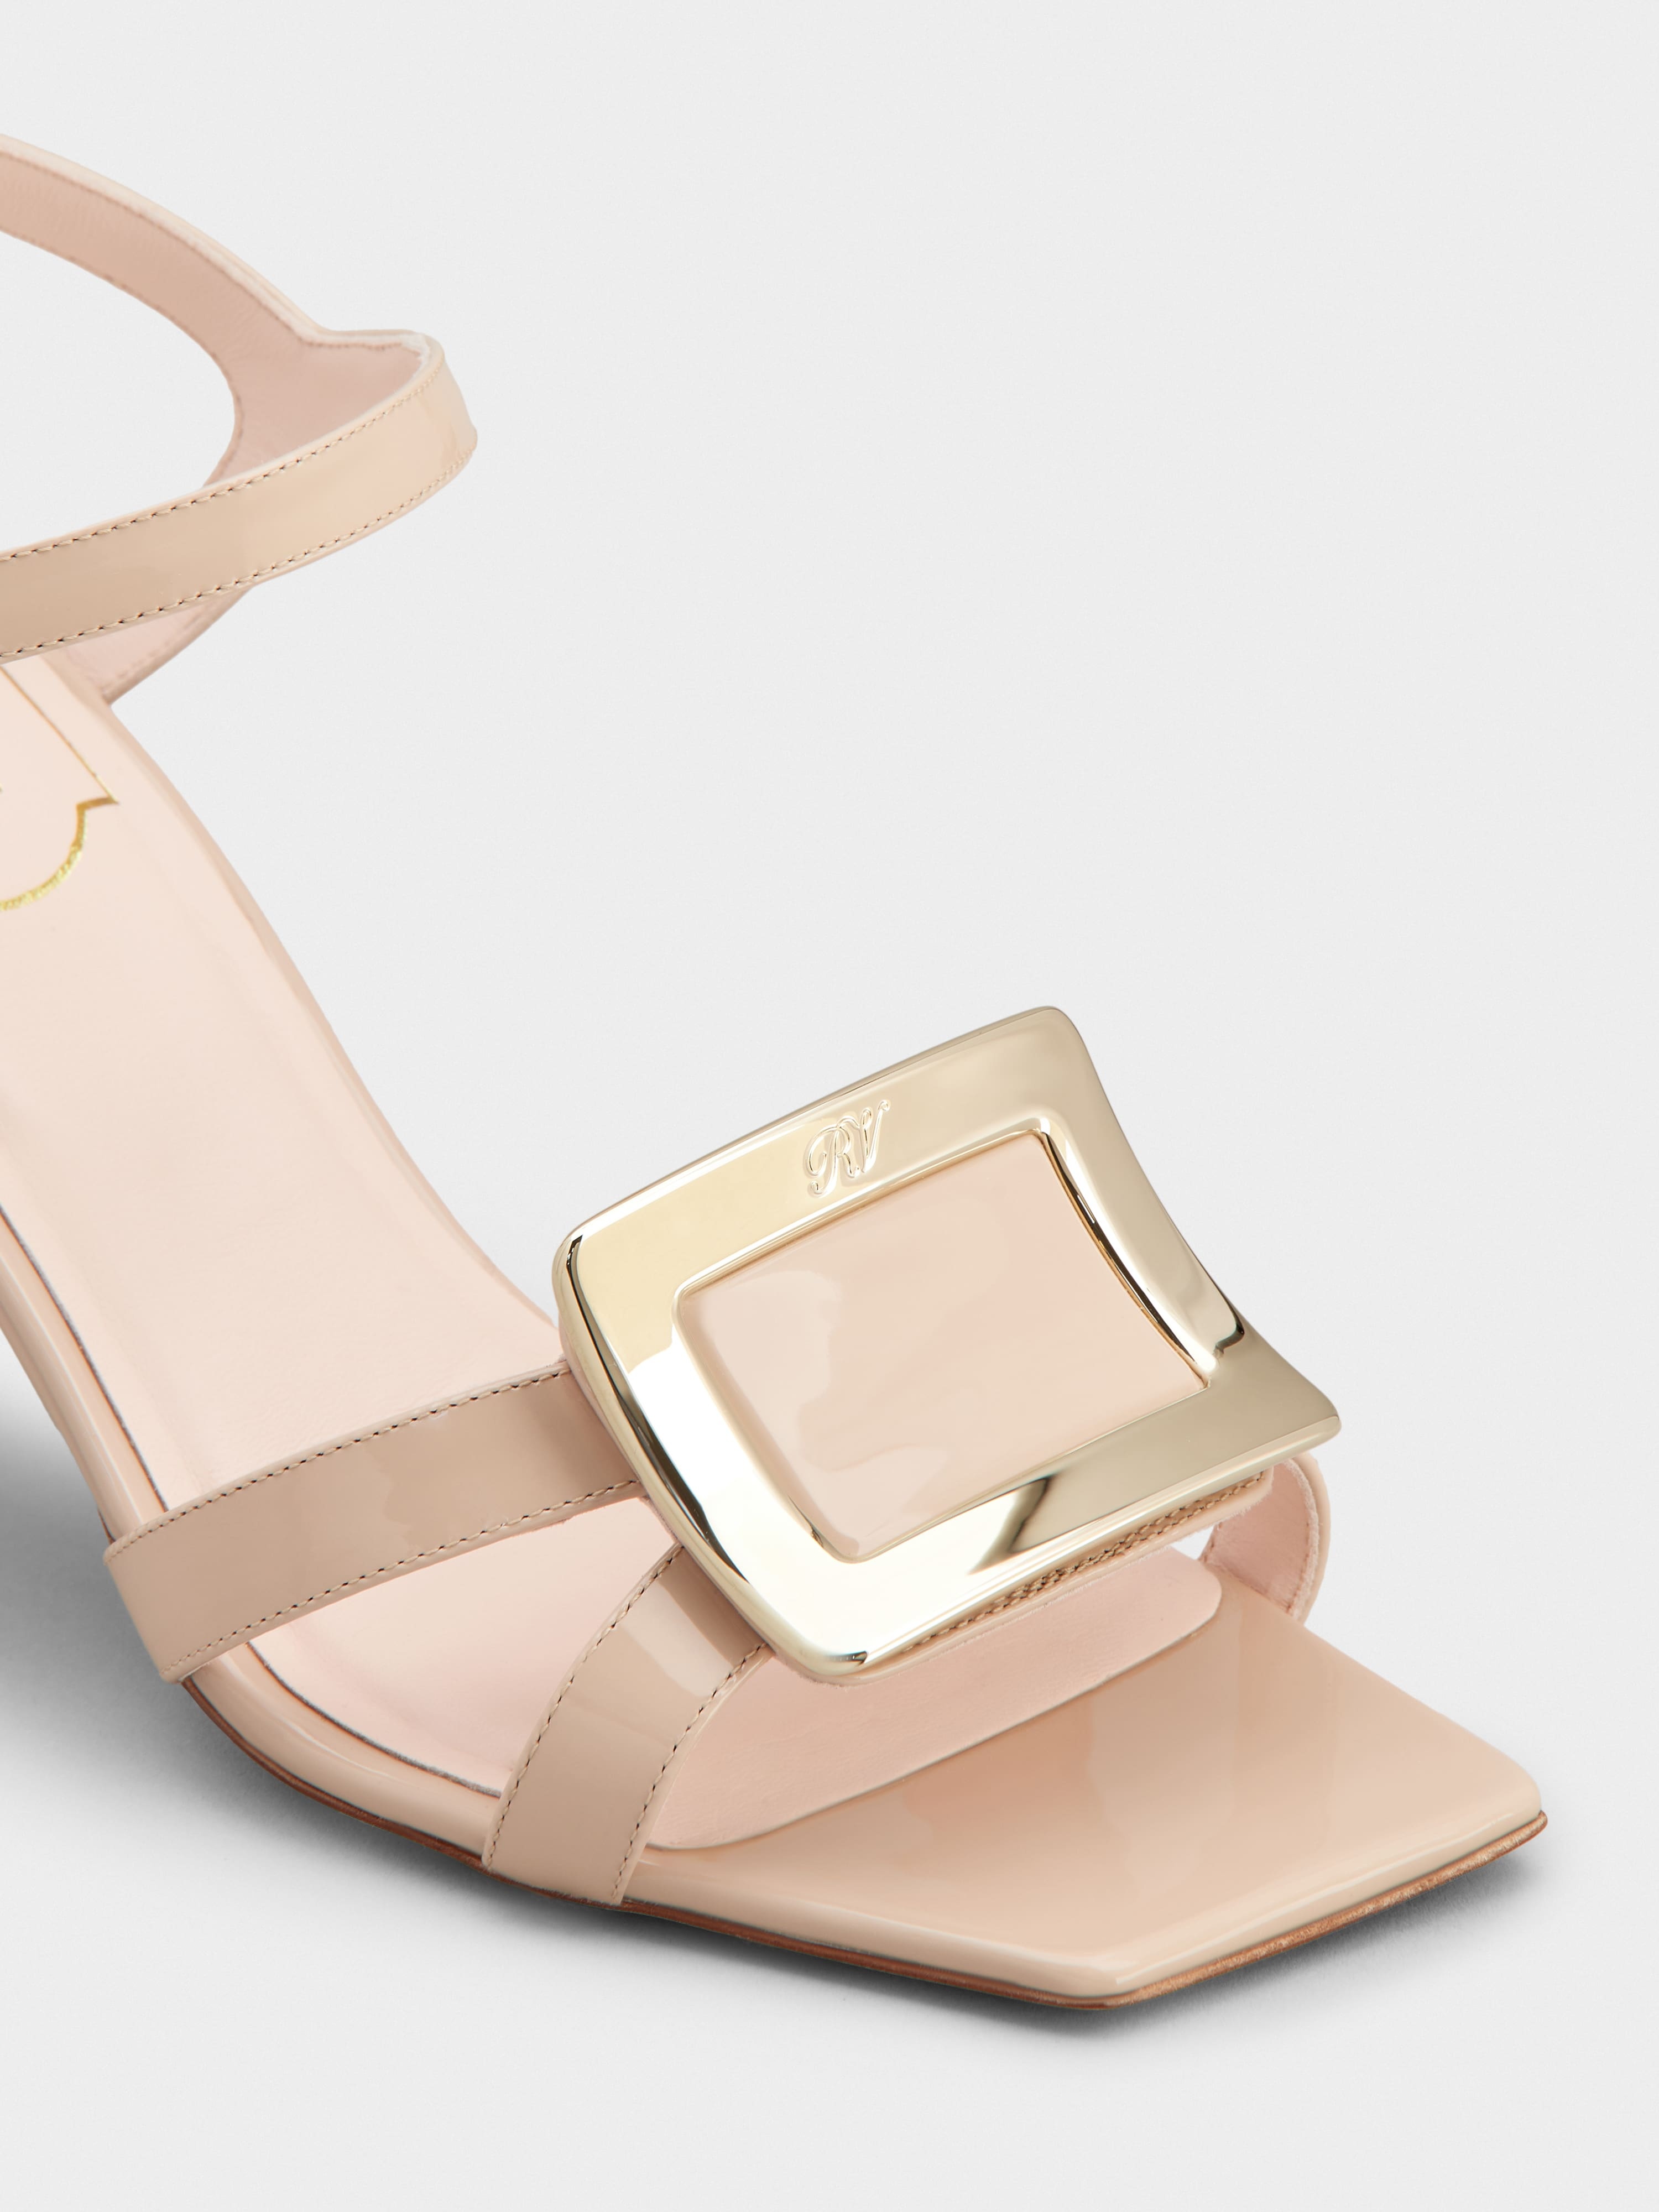 Belle Vivier Metal Buckle Sandals in Patent Leather - 3